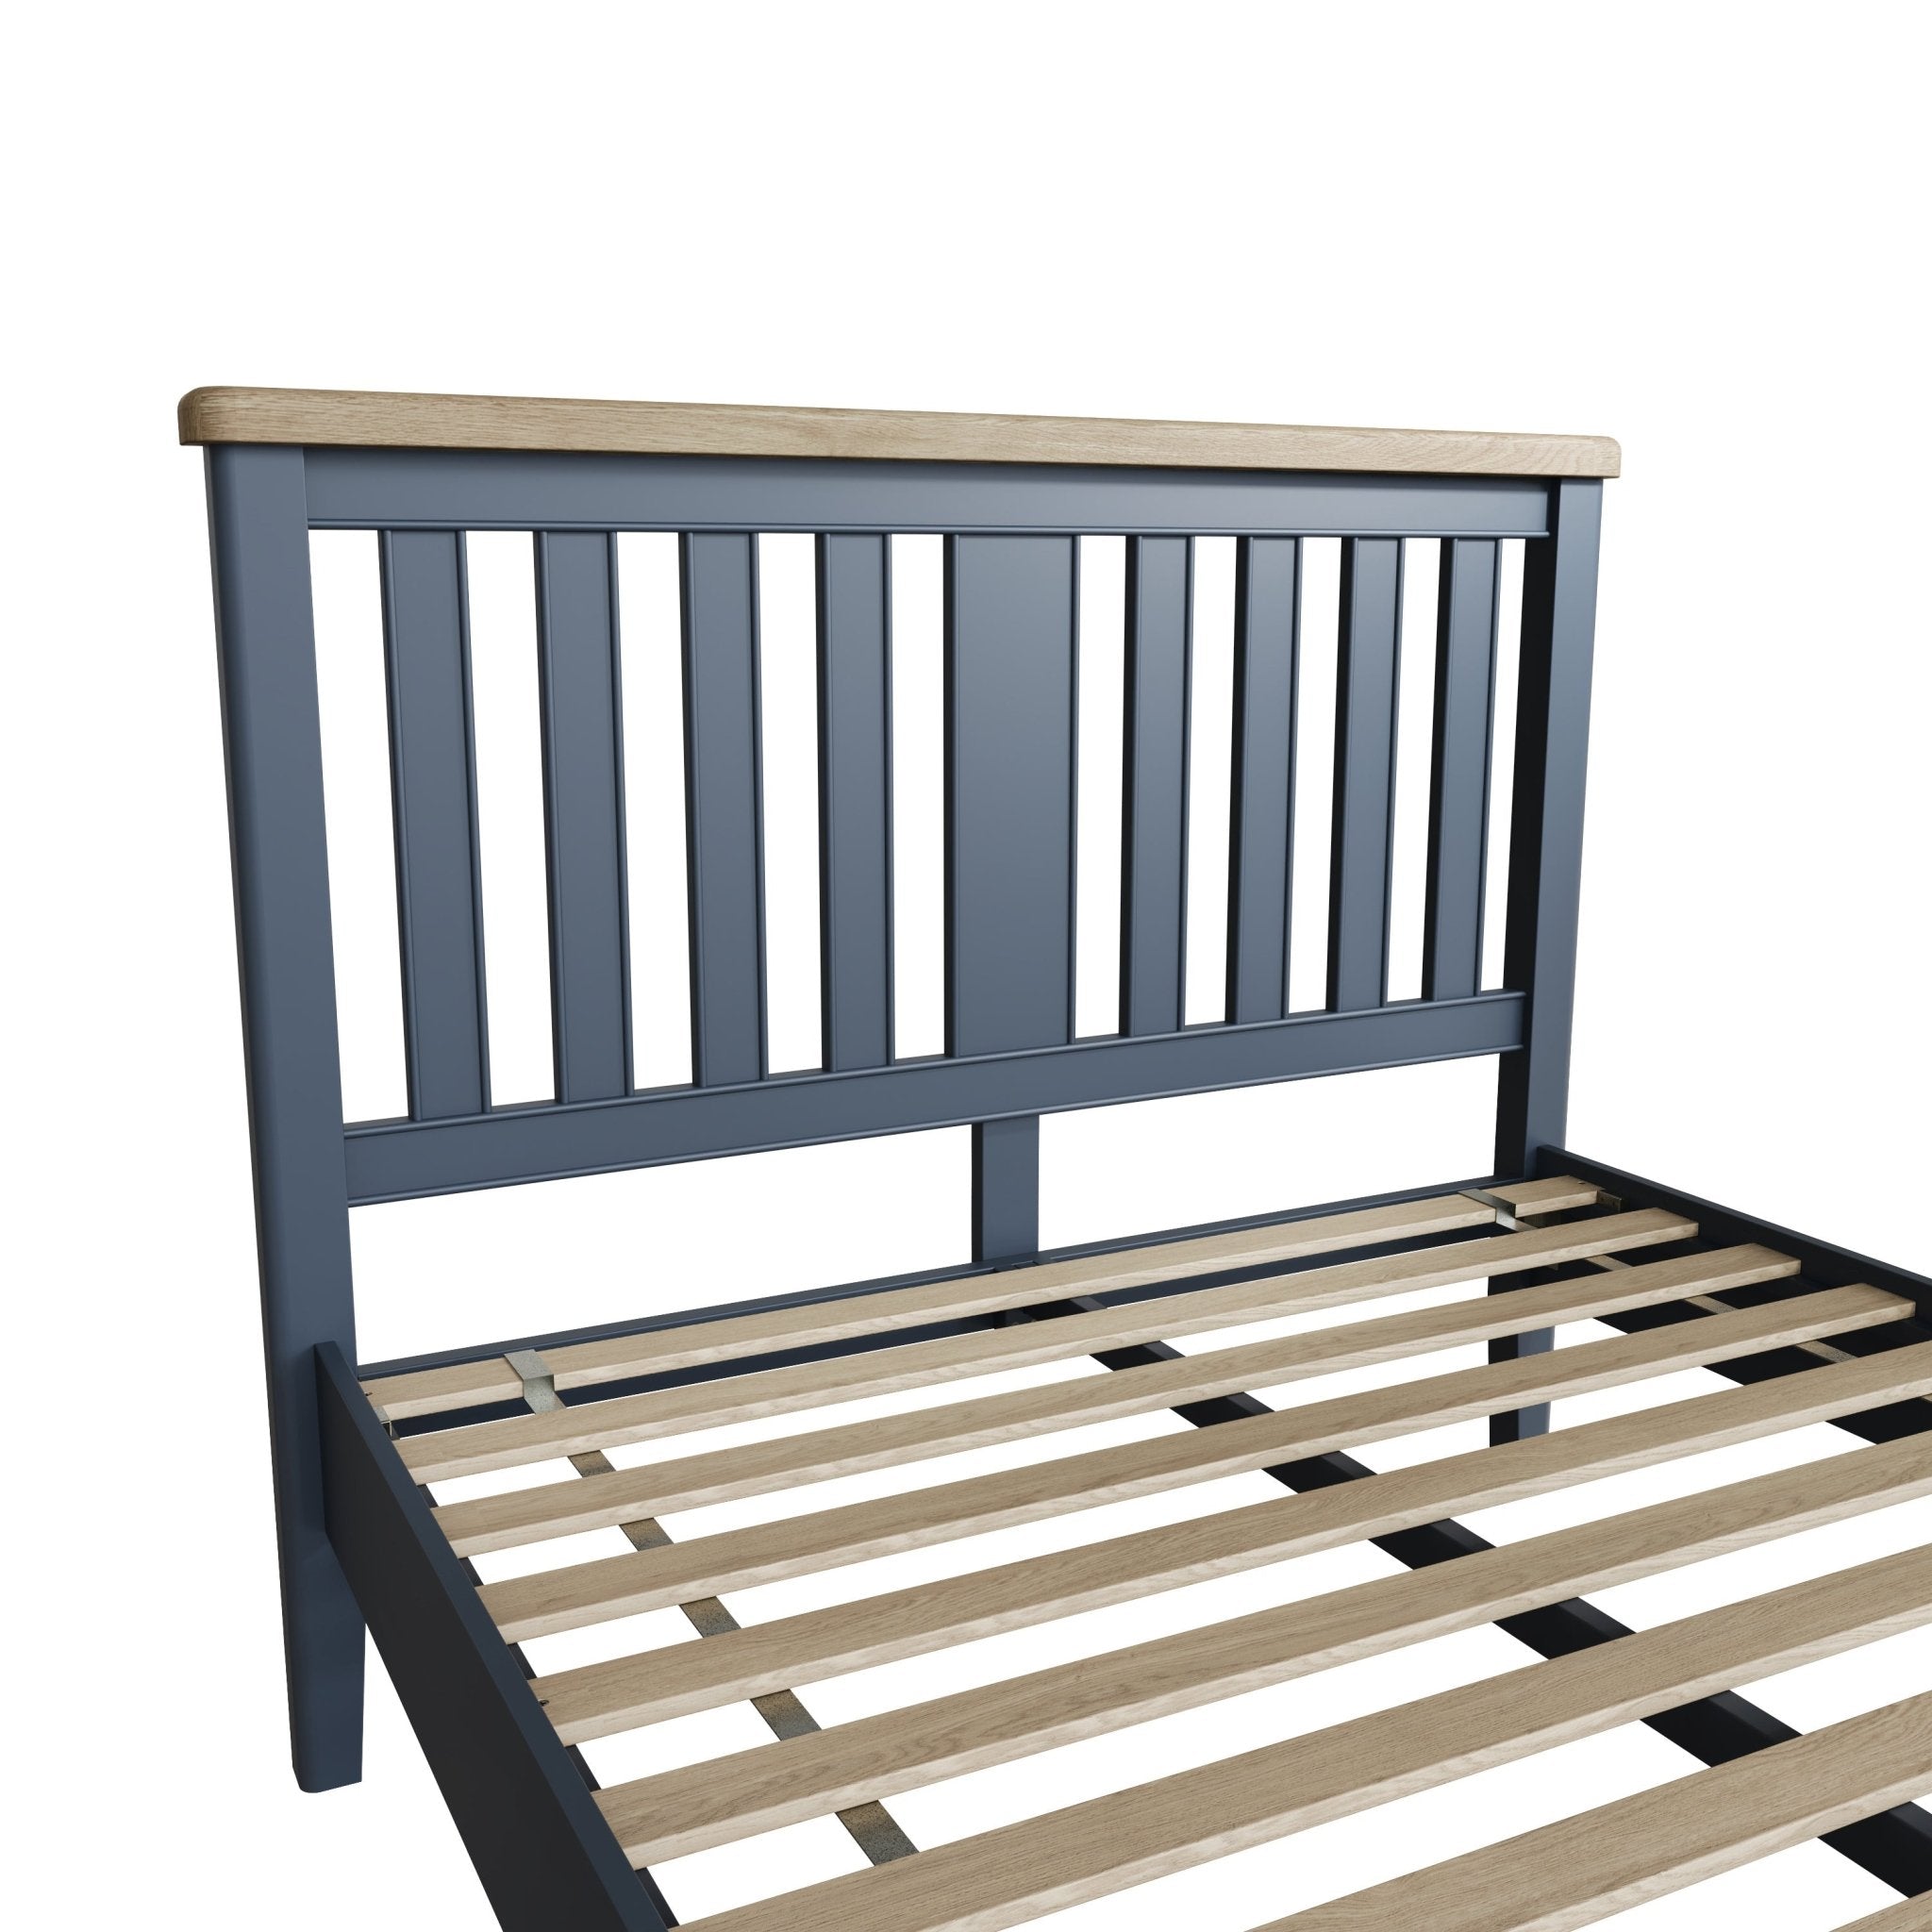 Rogate Blue 6'0 Super King Size Bed Frame - Wooden Headboard - Duck Barn Interiors